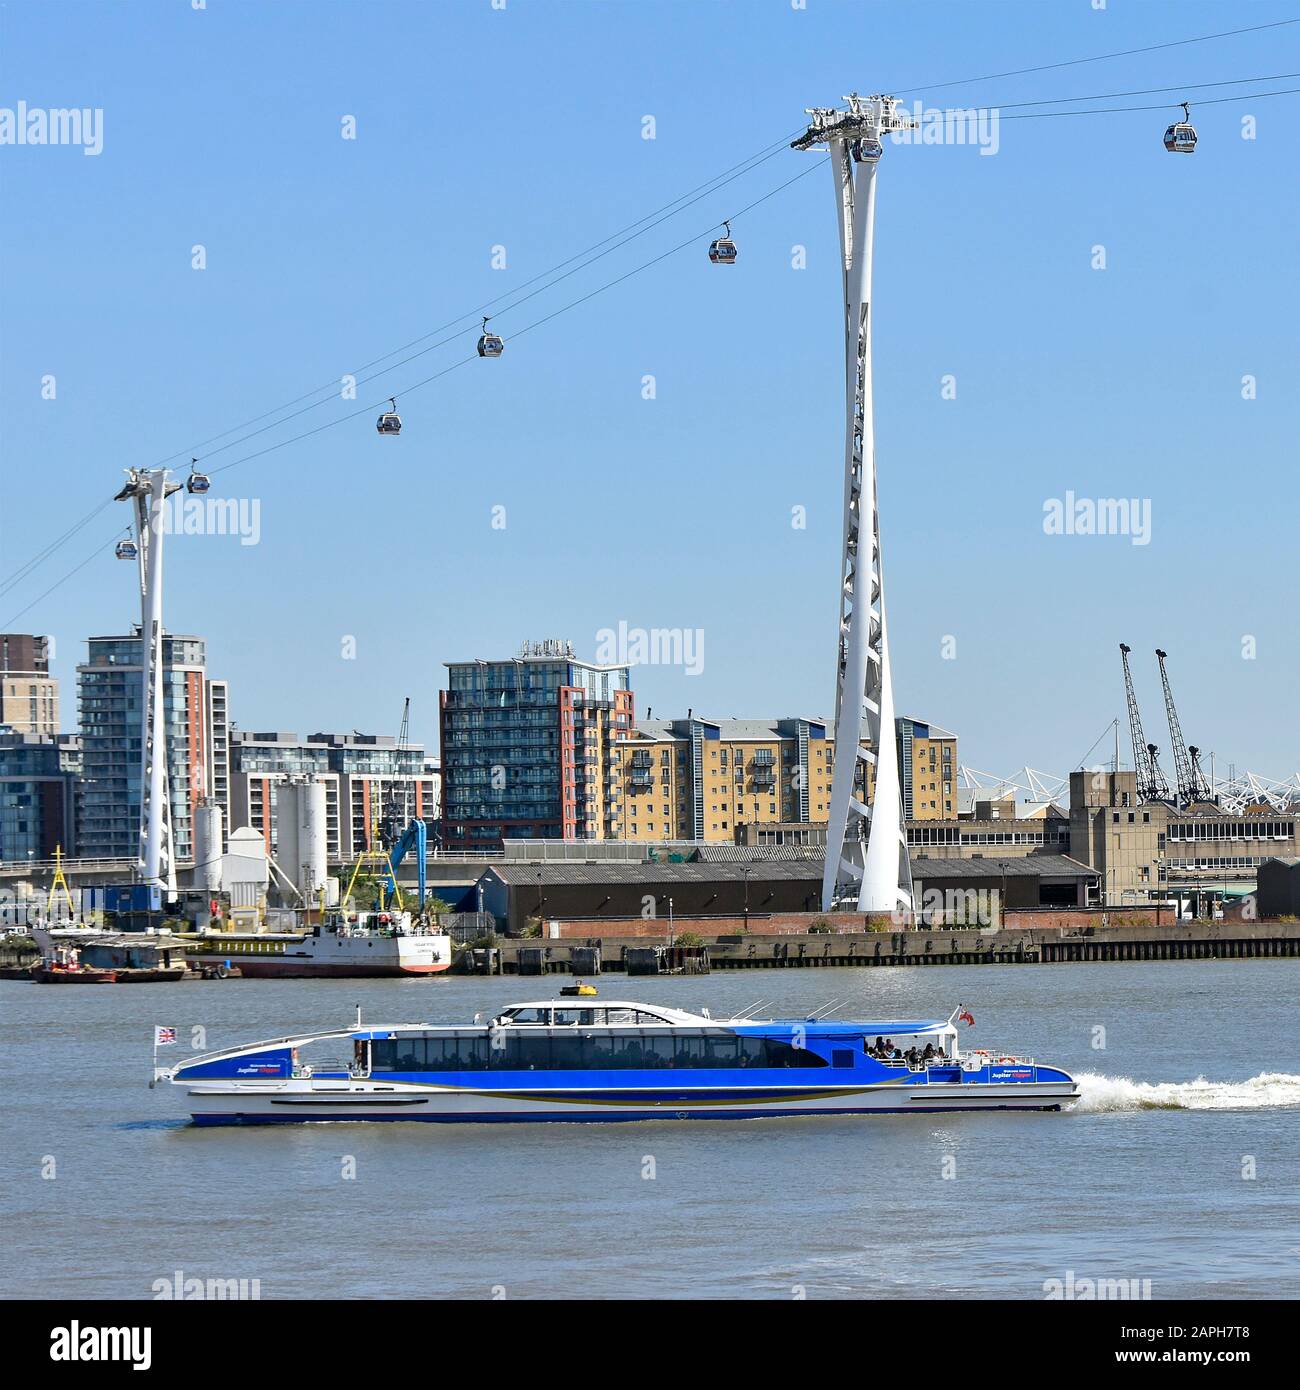 Tfl thames clipper catamaran riverbus passing below Emirates Air Line cable car link from Greenwich Peninsula to Royal Victoria Dock London England UK Stock Photo